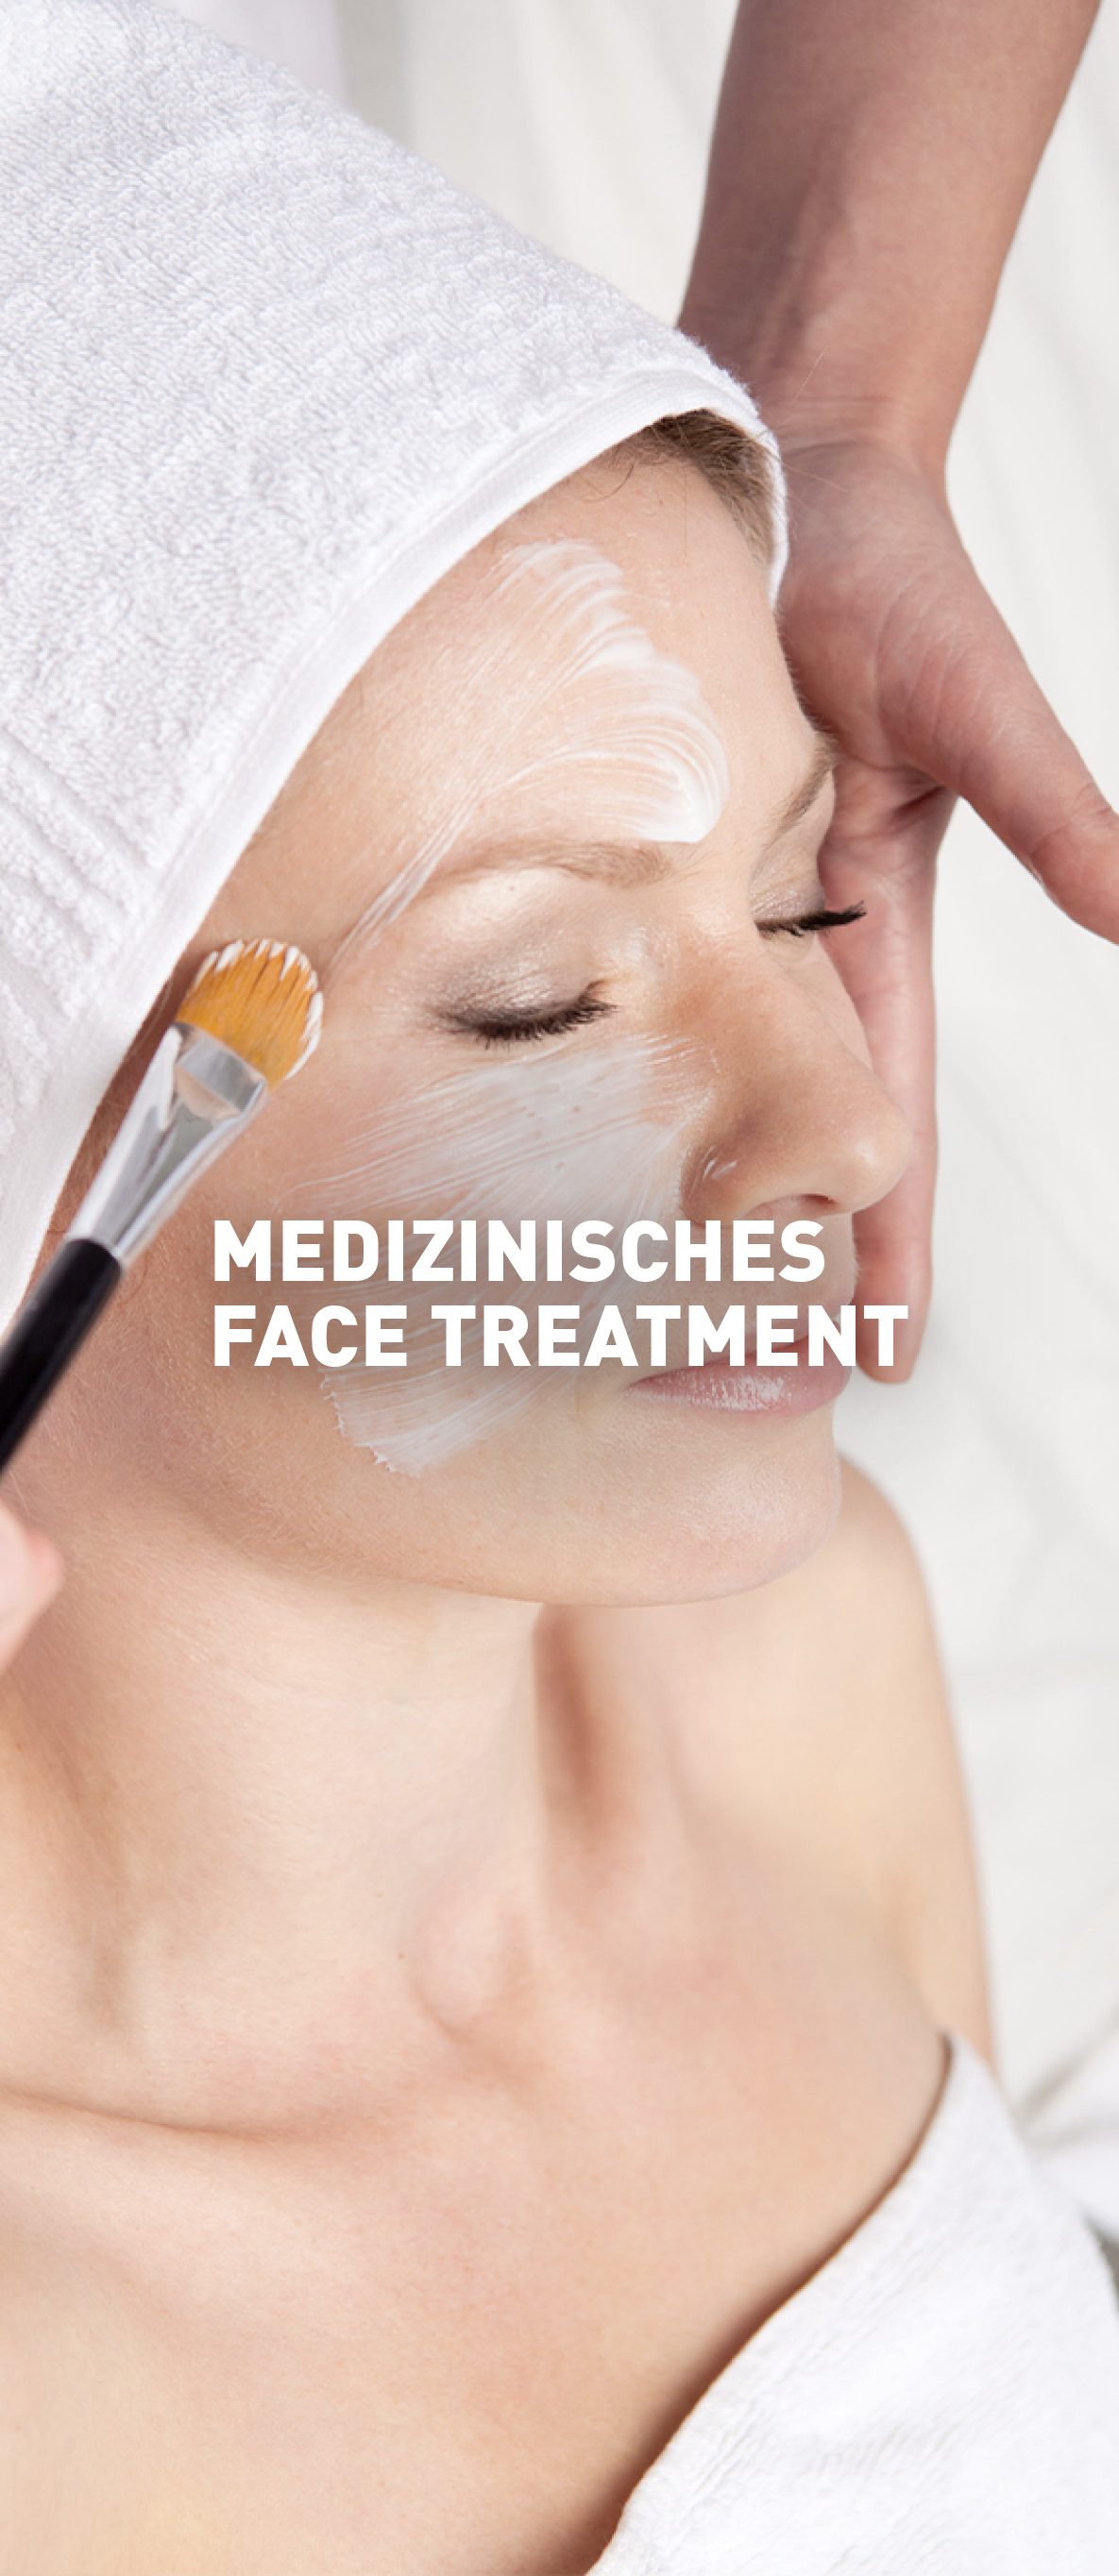 Medizinisches Face Treatment